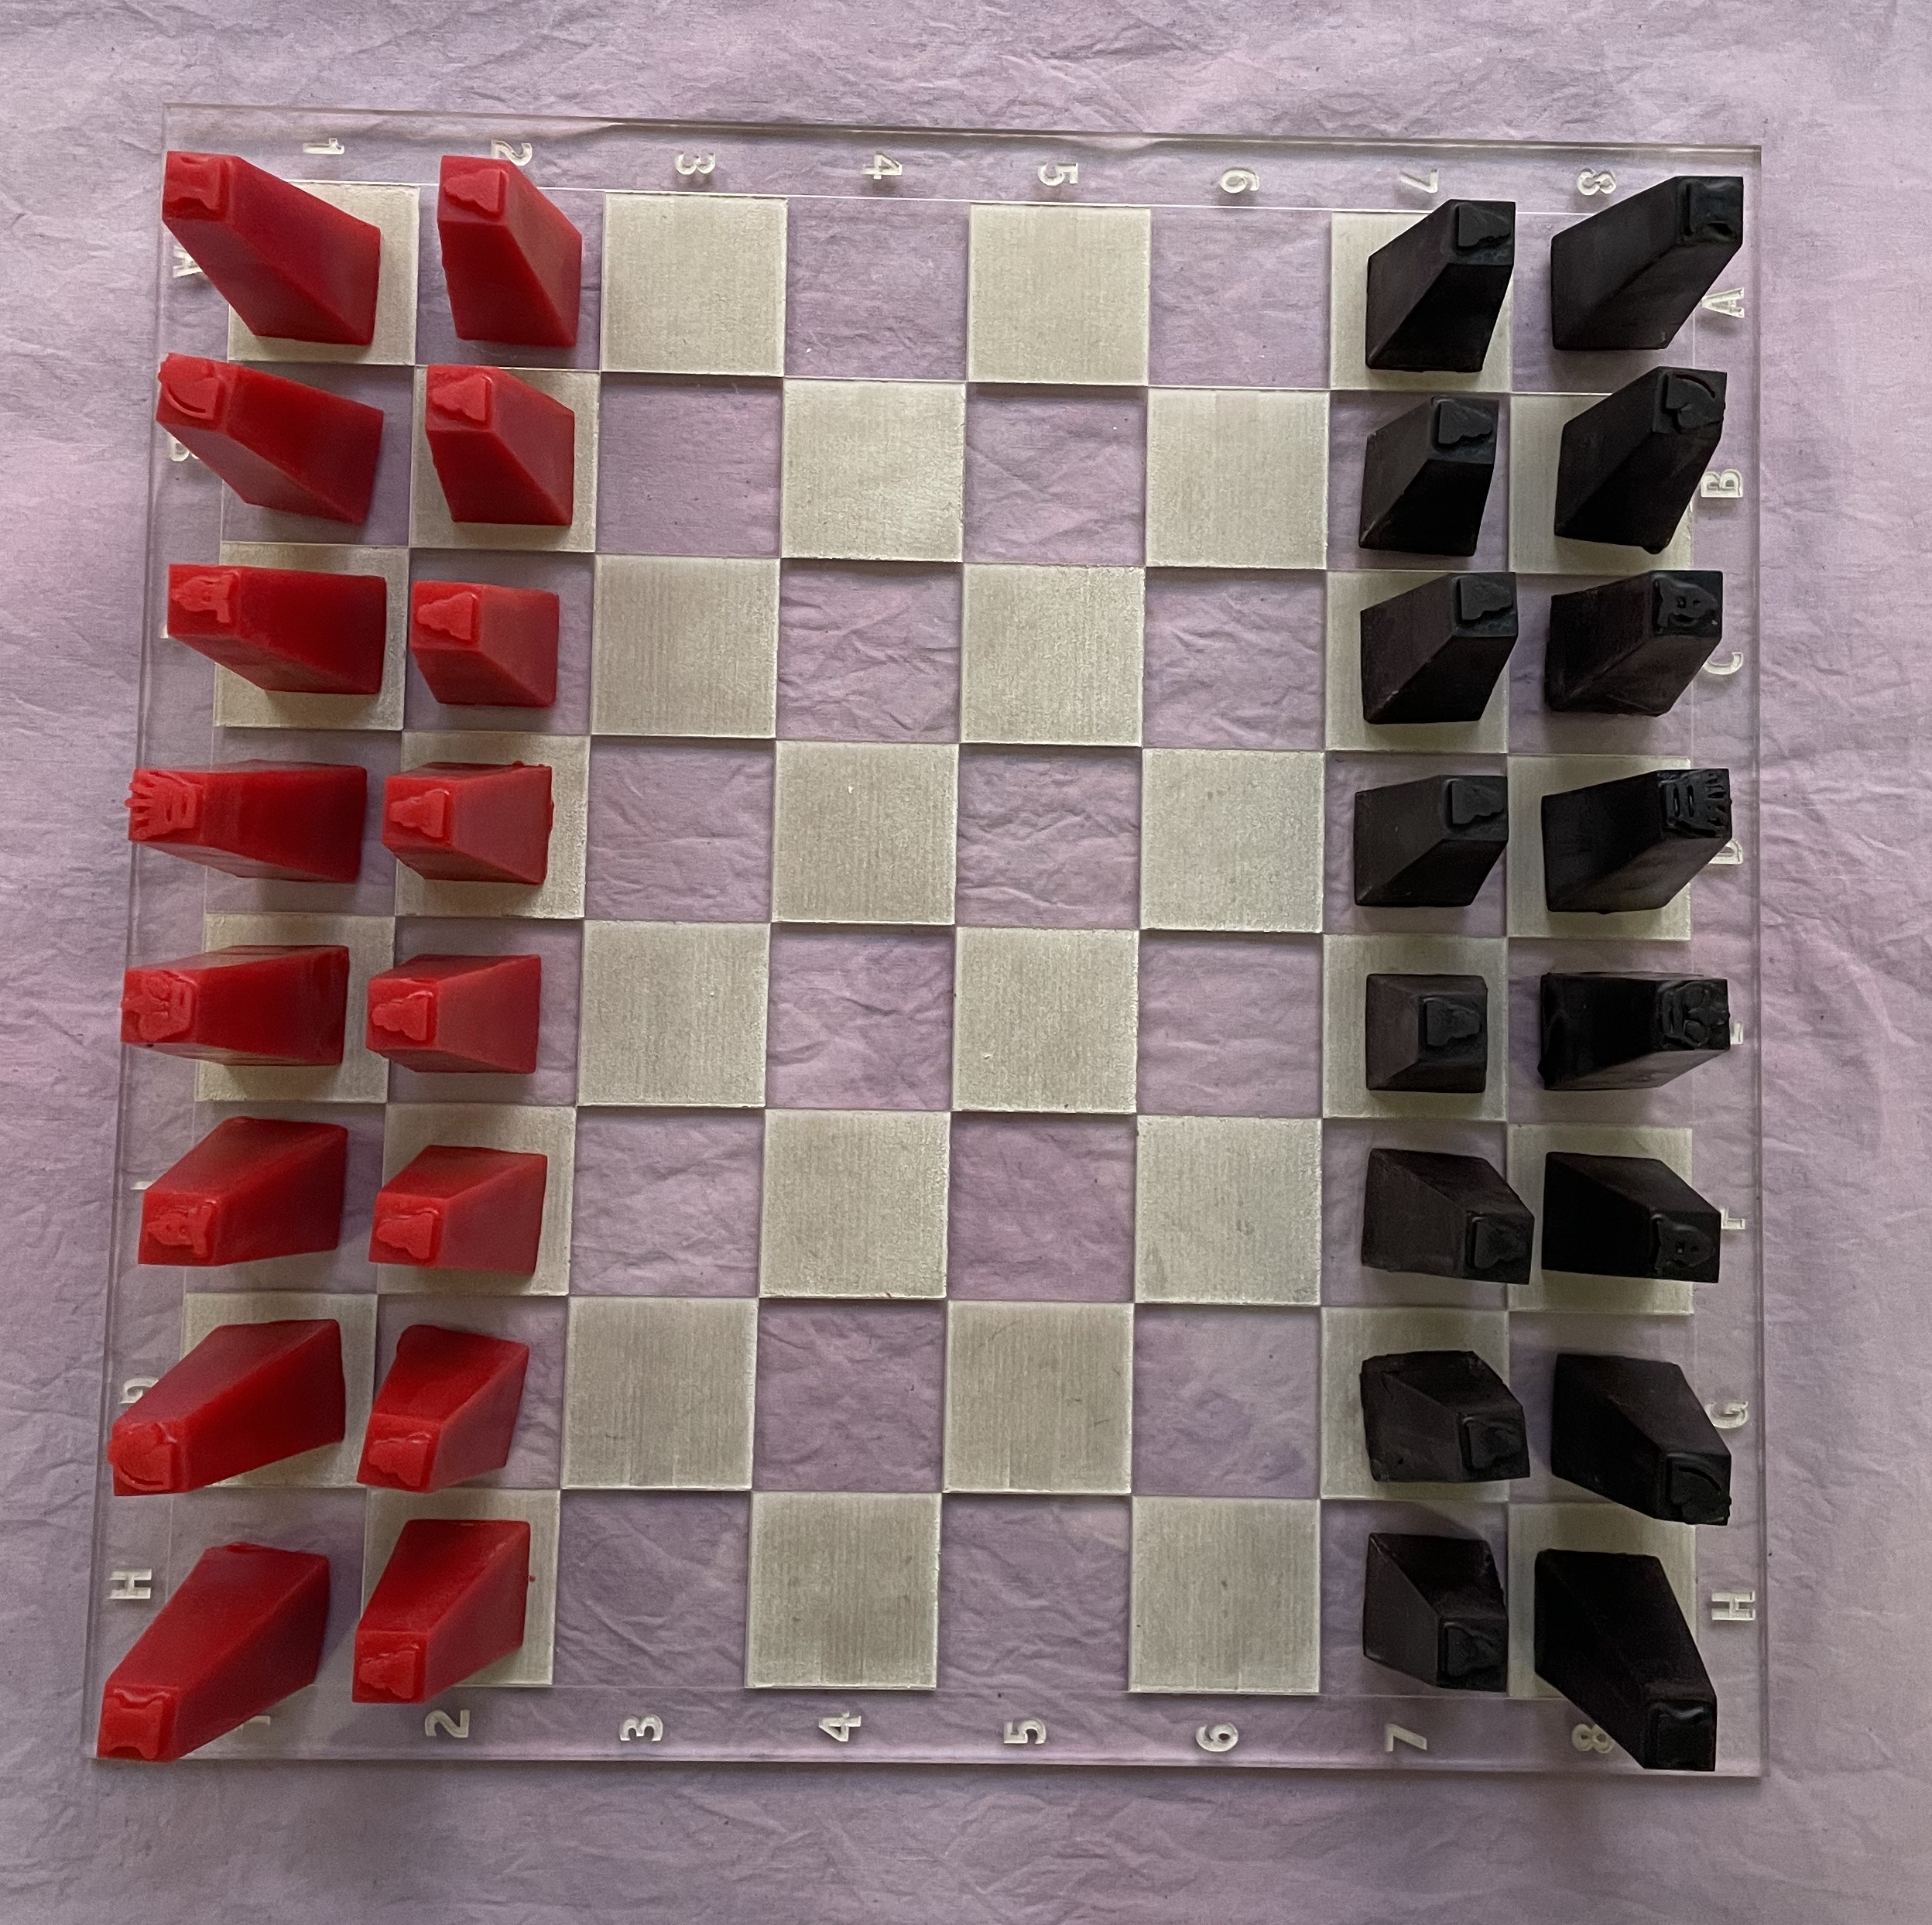 Chess mold Plaster concrete plastic game decor mold 